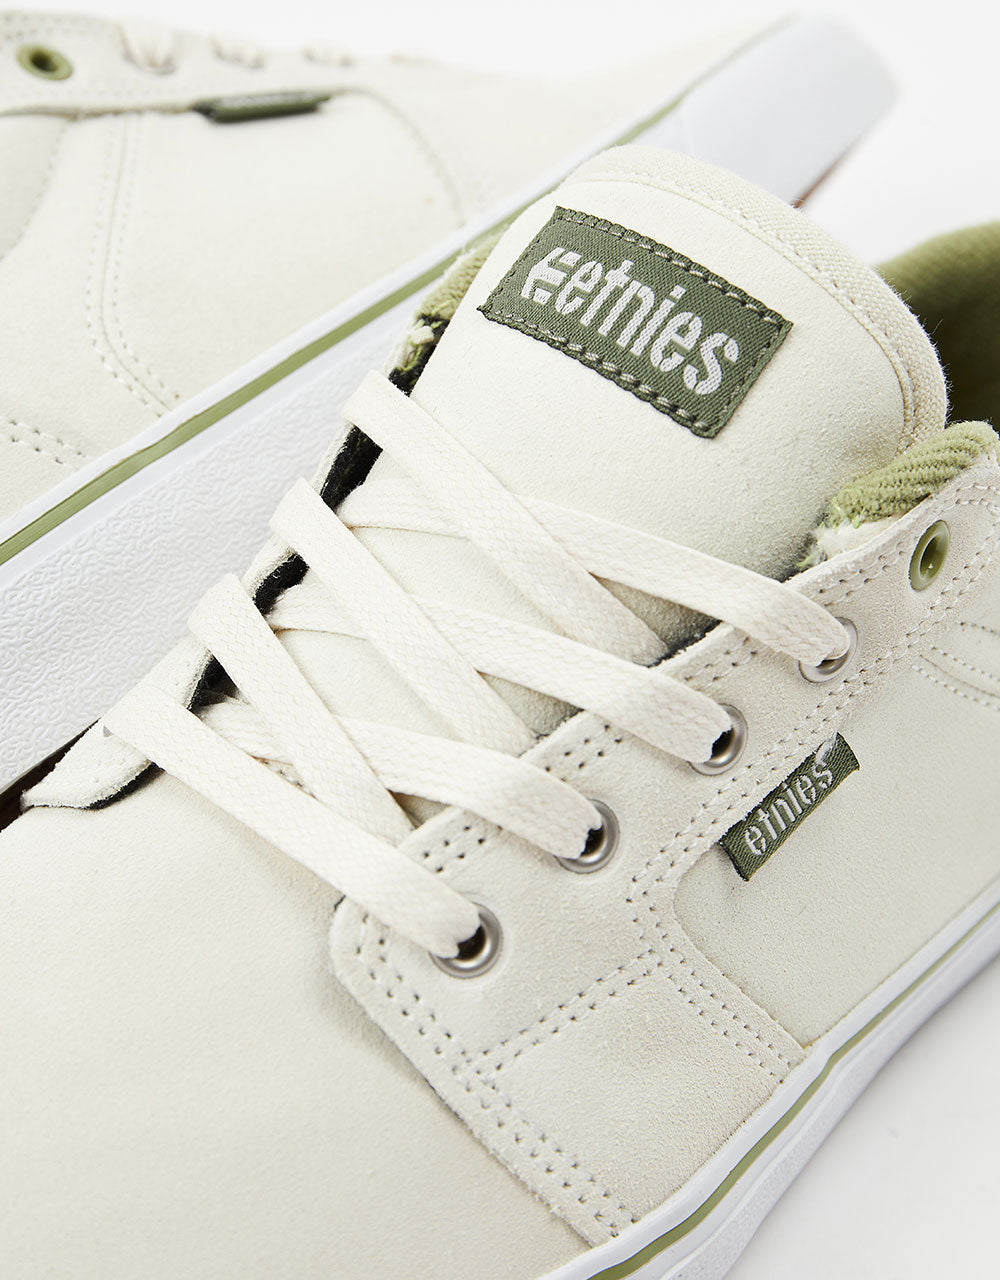 Etnies Barge LS Skate Shoes - White/Green